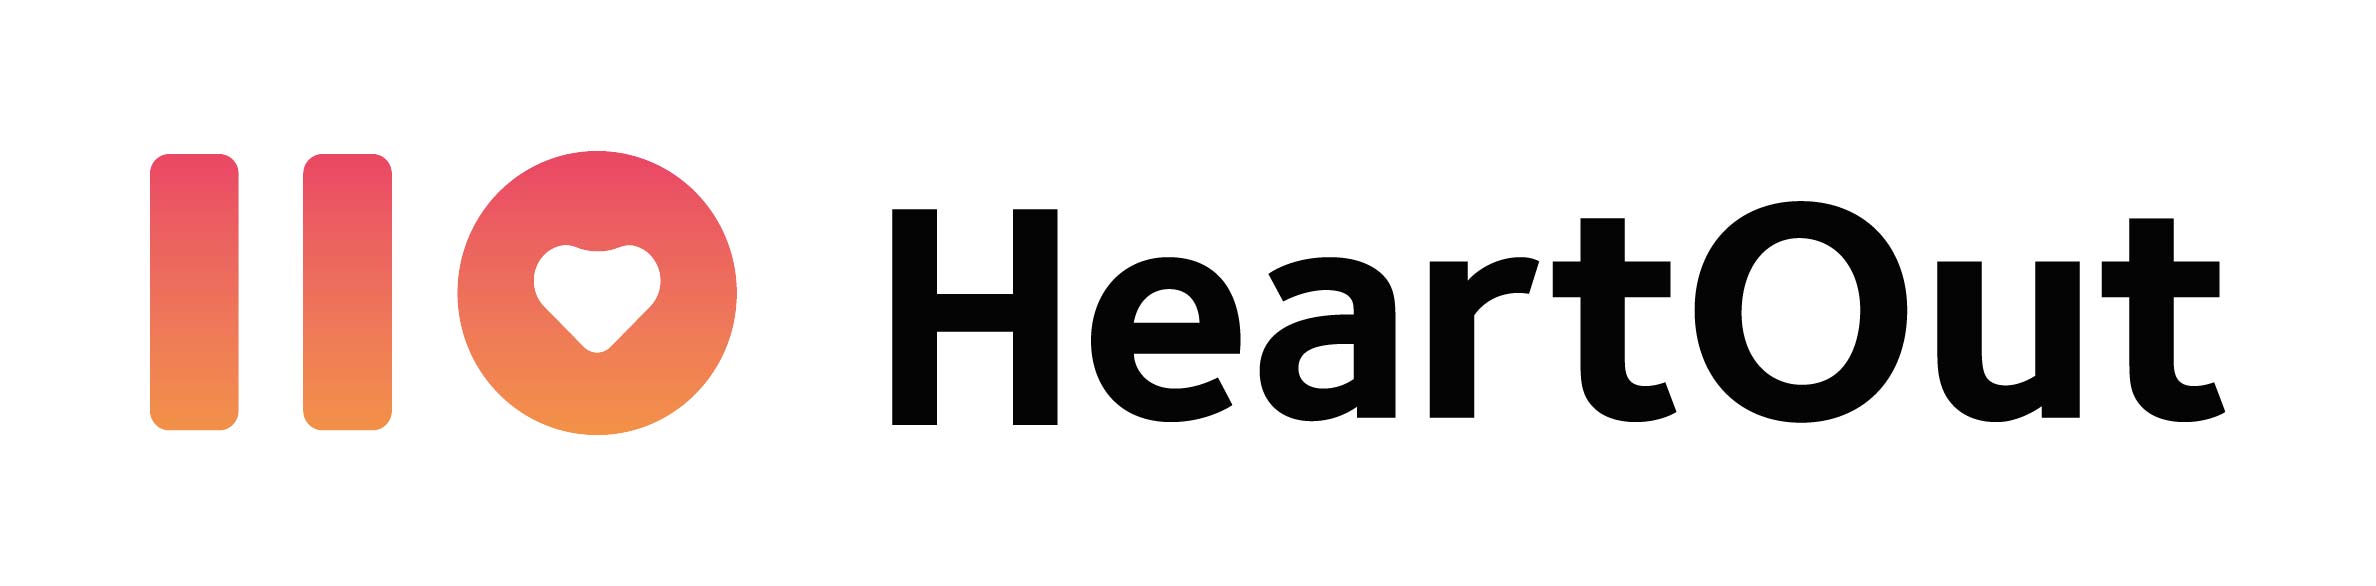 logo_heartout-margin.jpg